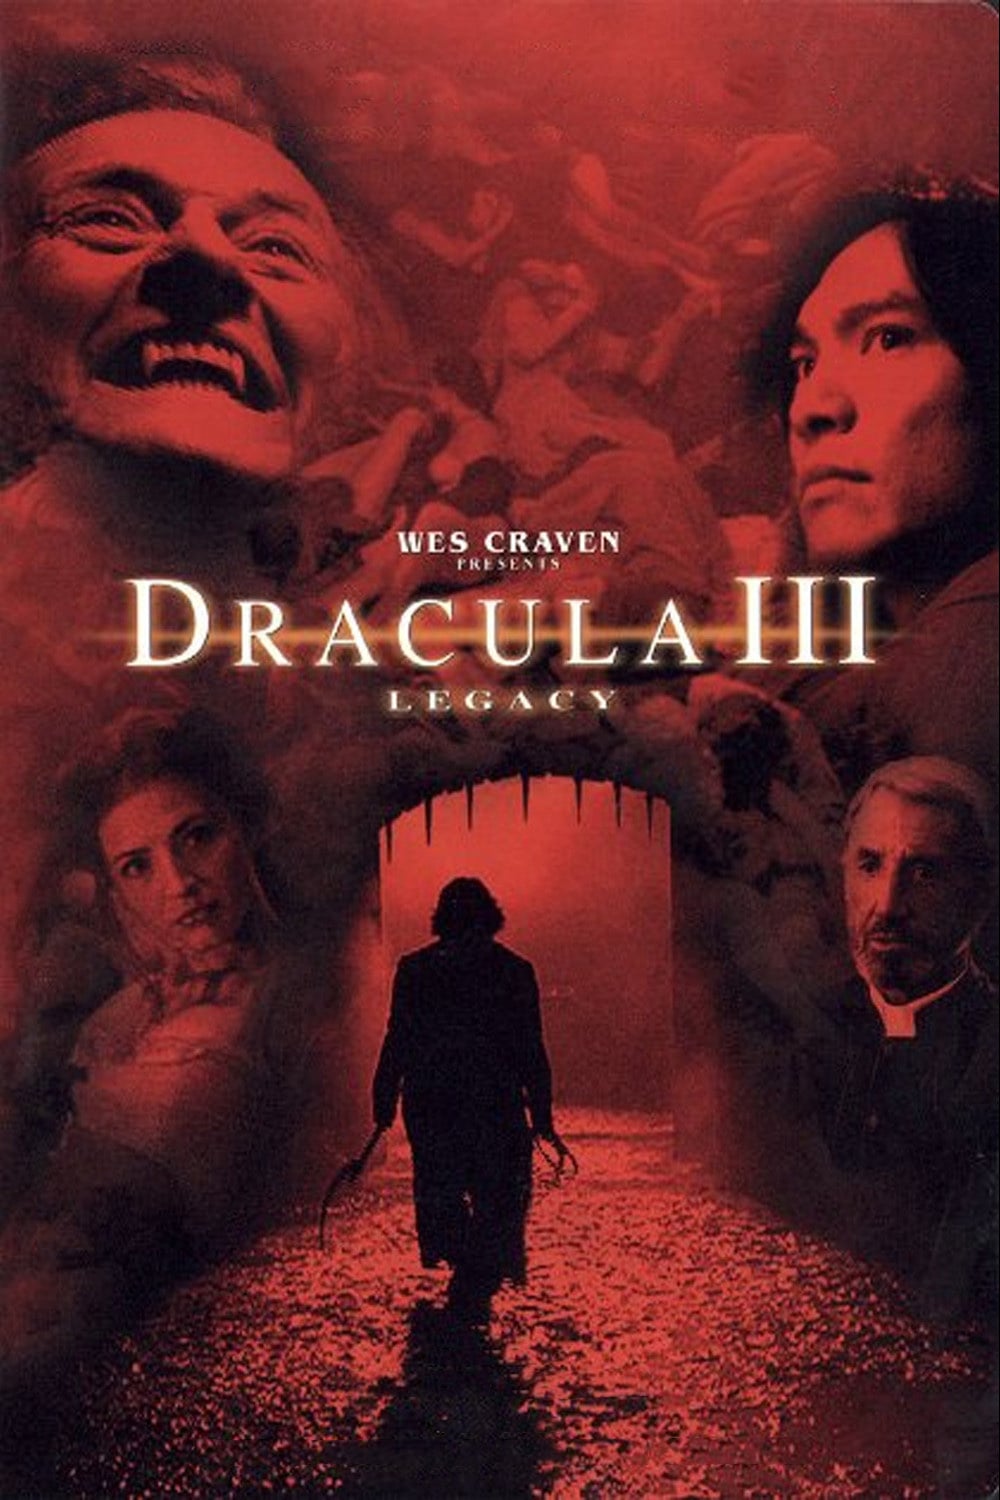 Plakat von "Dracula III: Legacy"